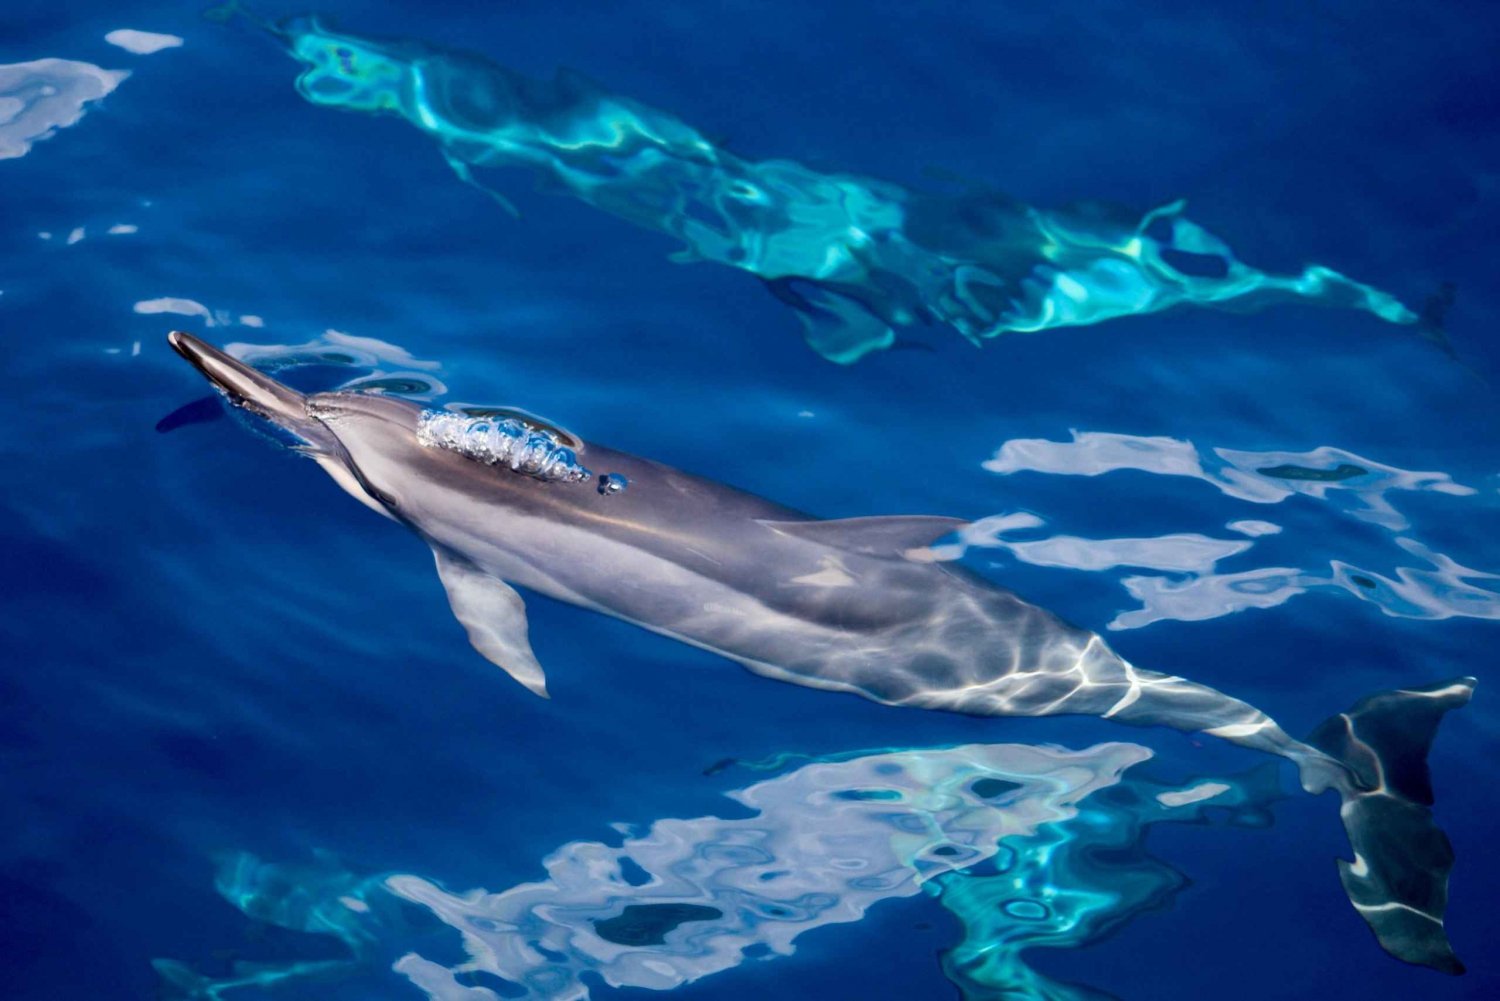 Det sydlige Maui: Lanai Snorkel & Dolphin Watch fra Maalaea